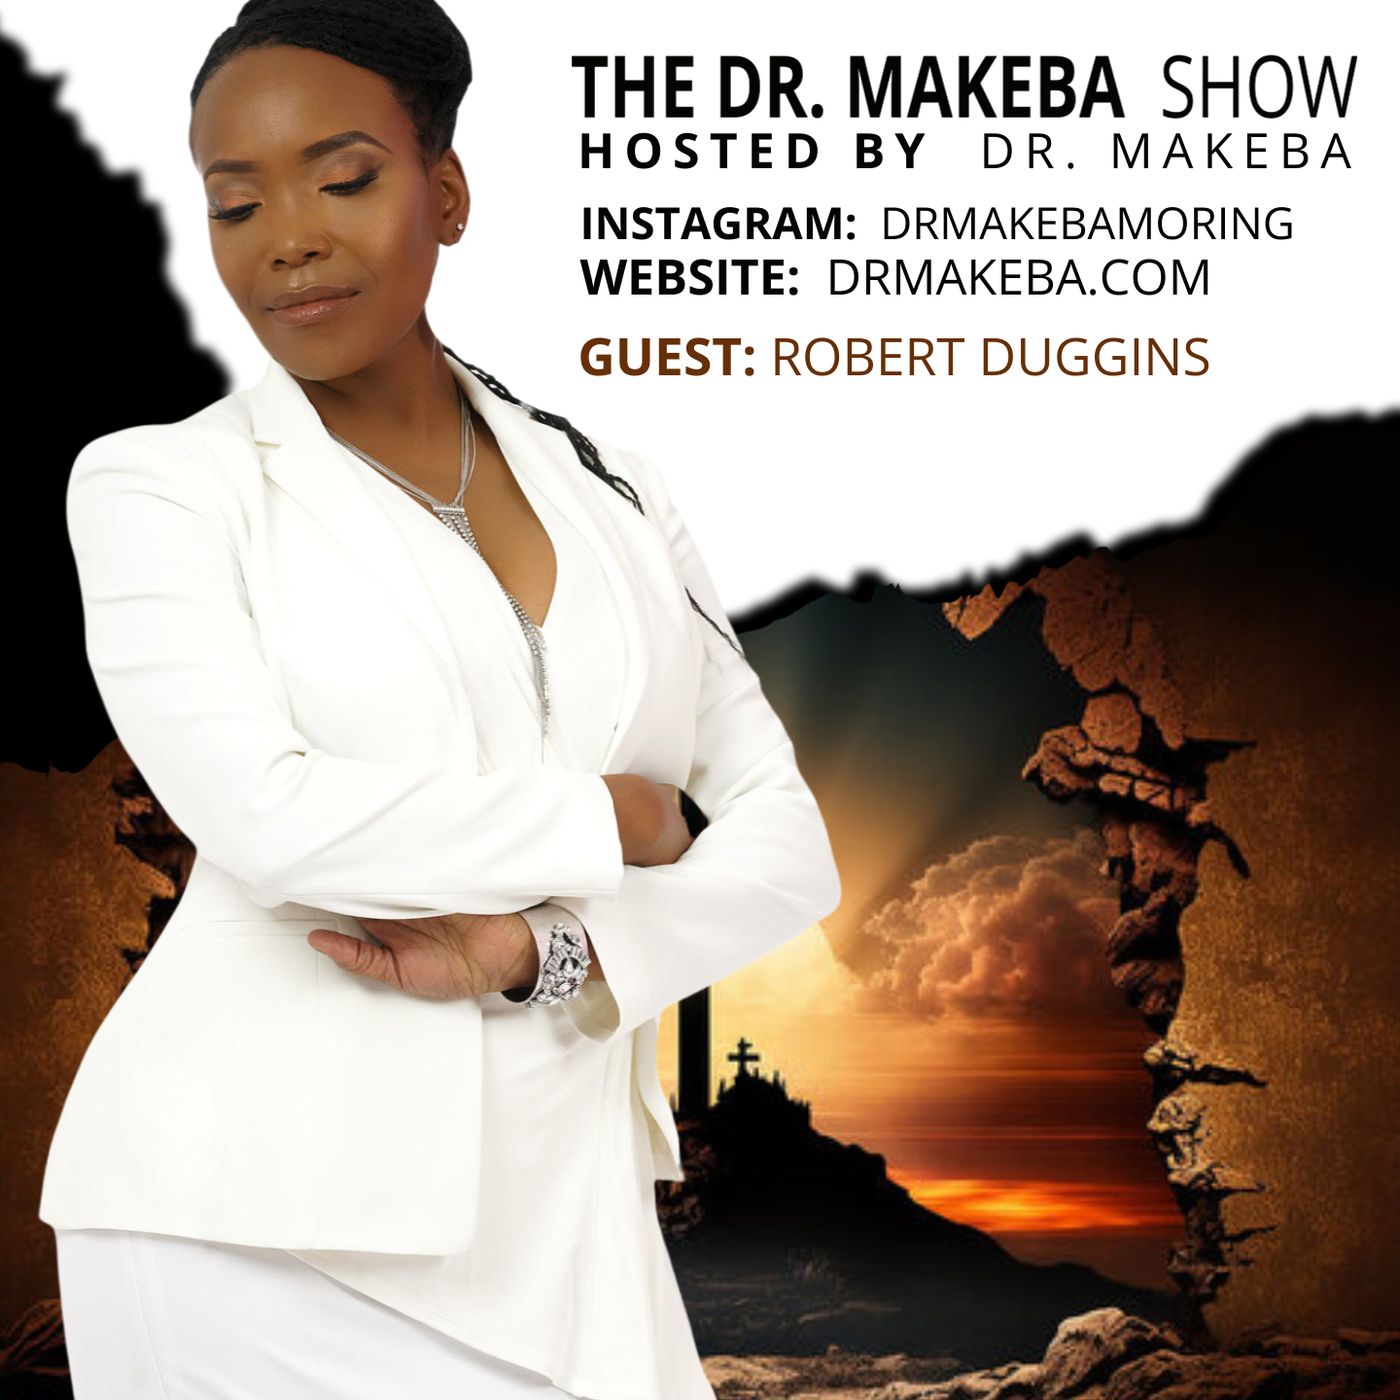 THE DR. MAKEBA SHOW, HOSTED BY DR. MAKEBA MORING (G: ROBERT DUGGINS)